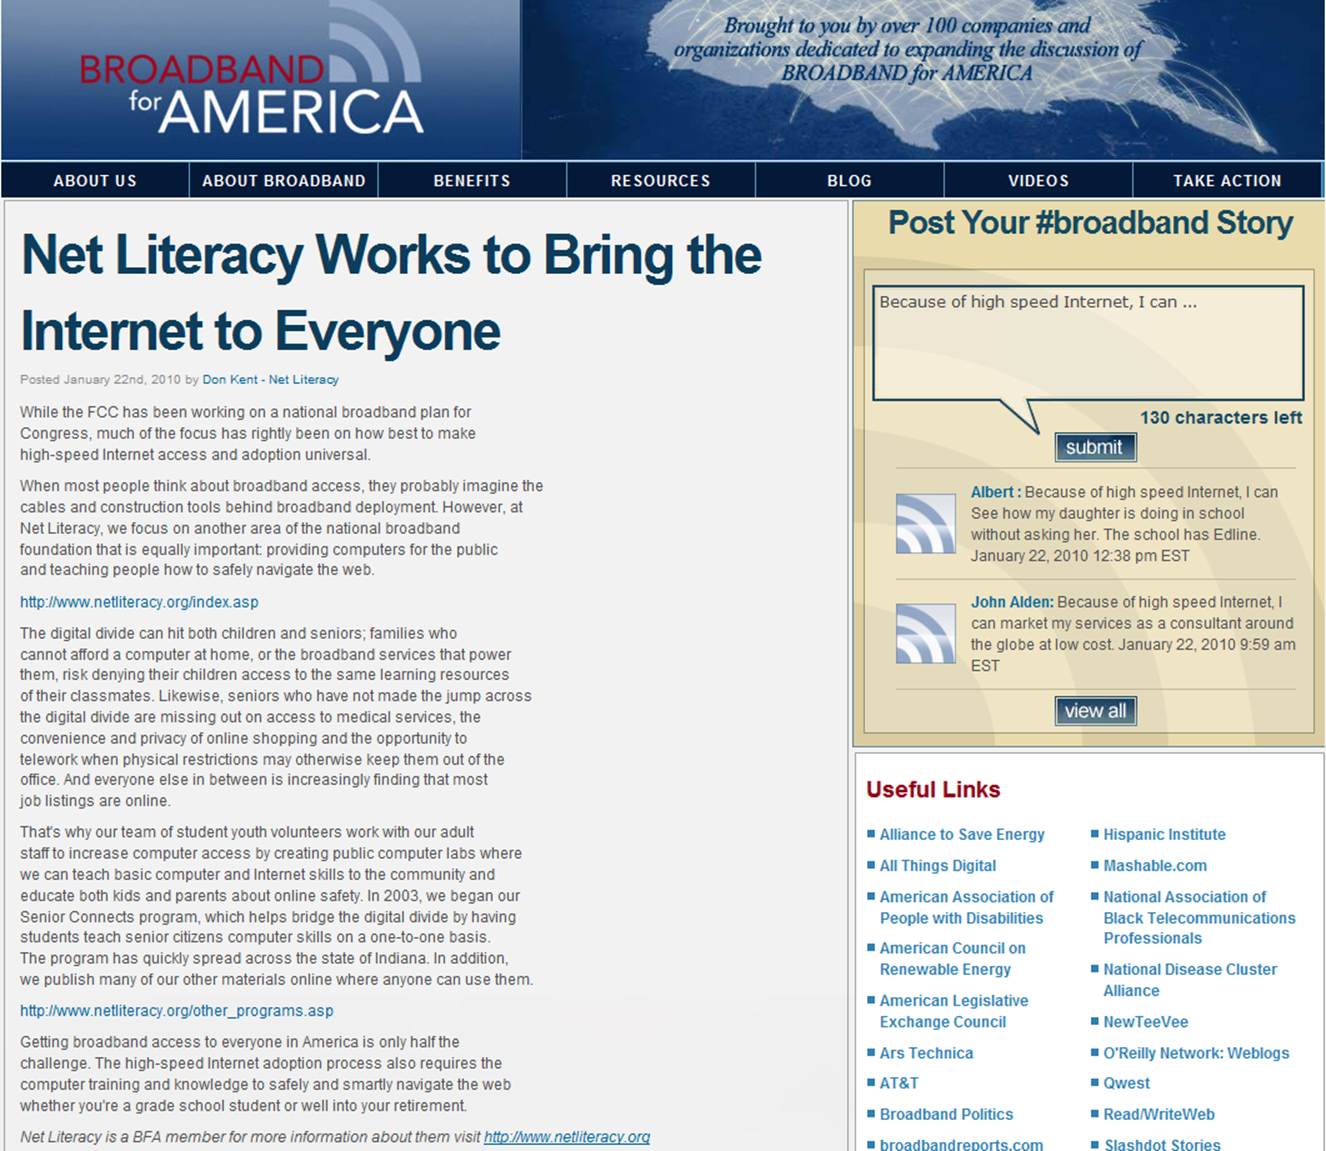 Broadband for America